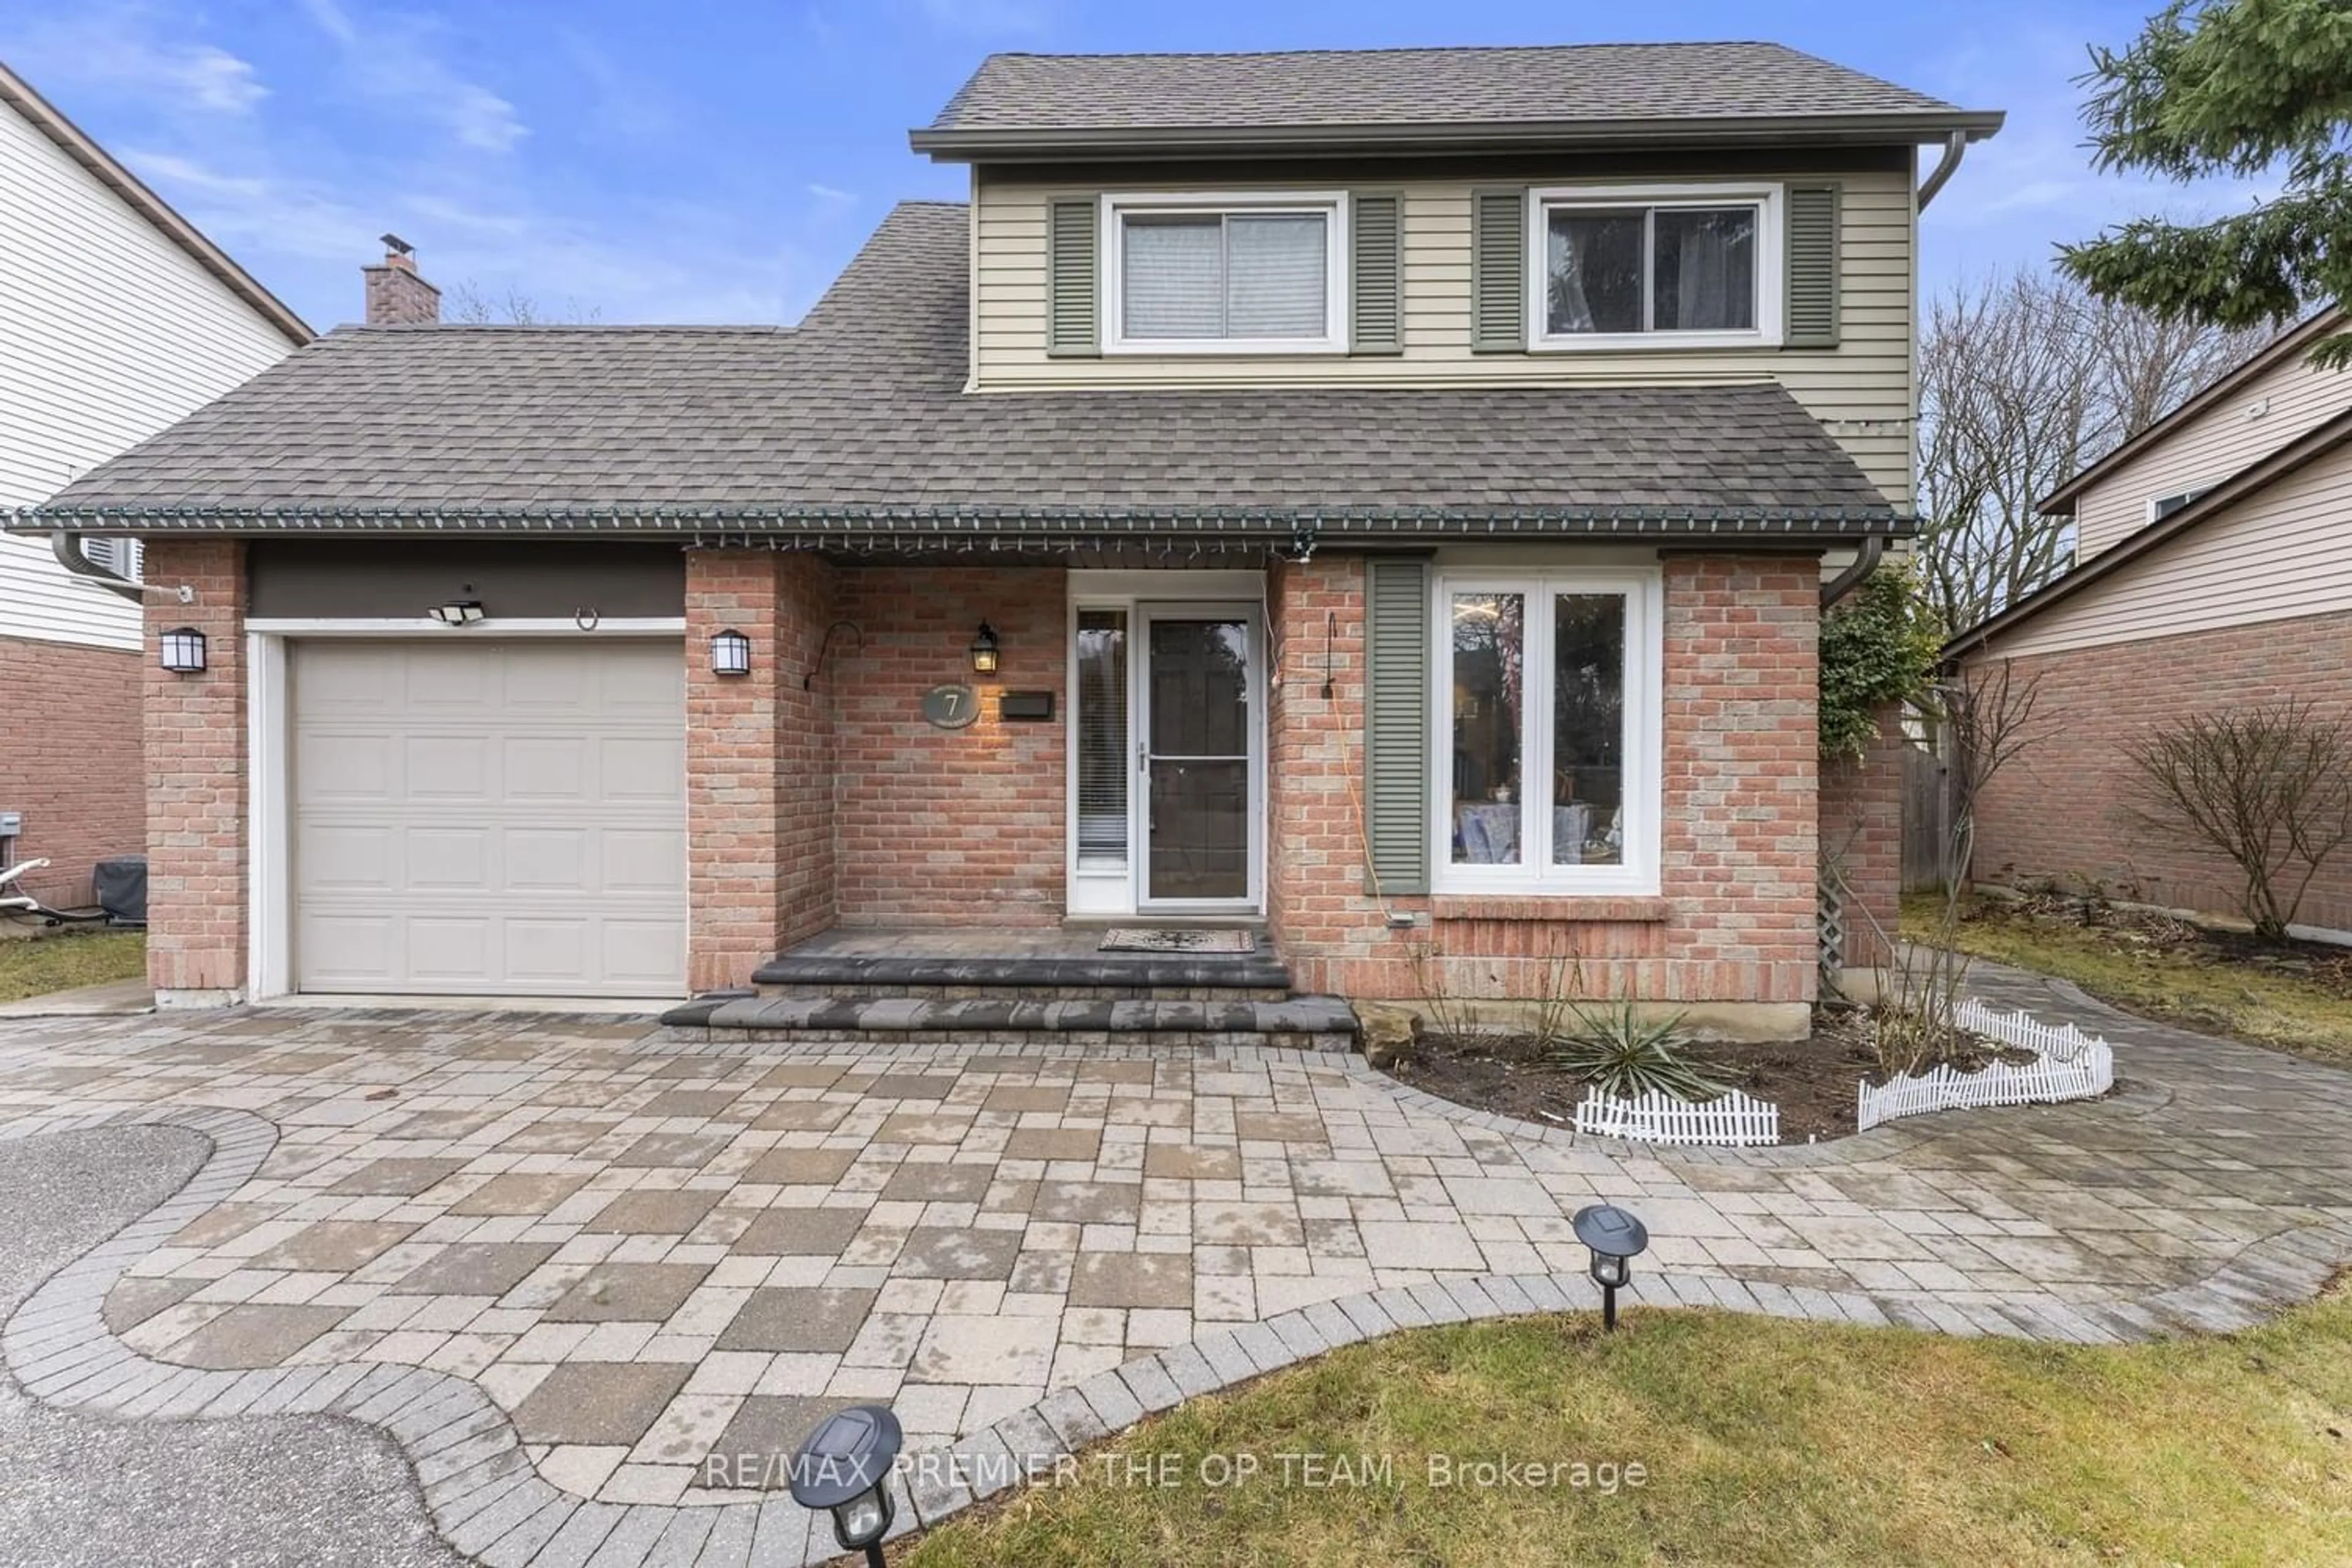 Home with brick exterior material for 7 Springburn Cres, Aurora Ontario L4G 3P4